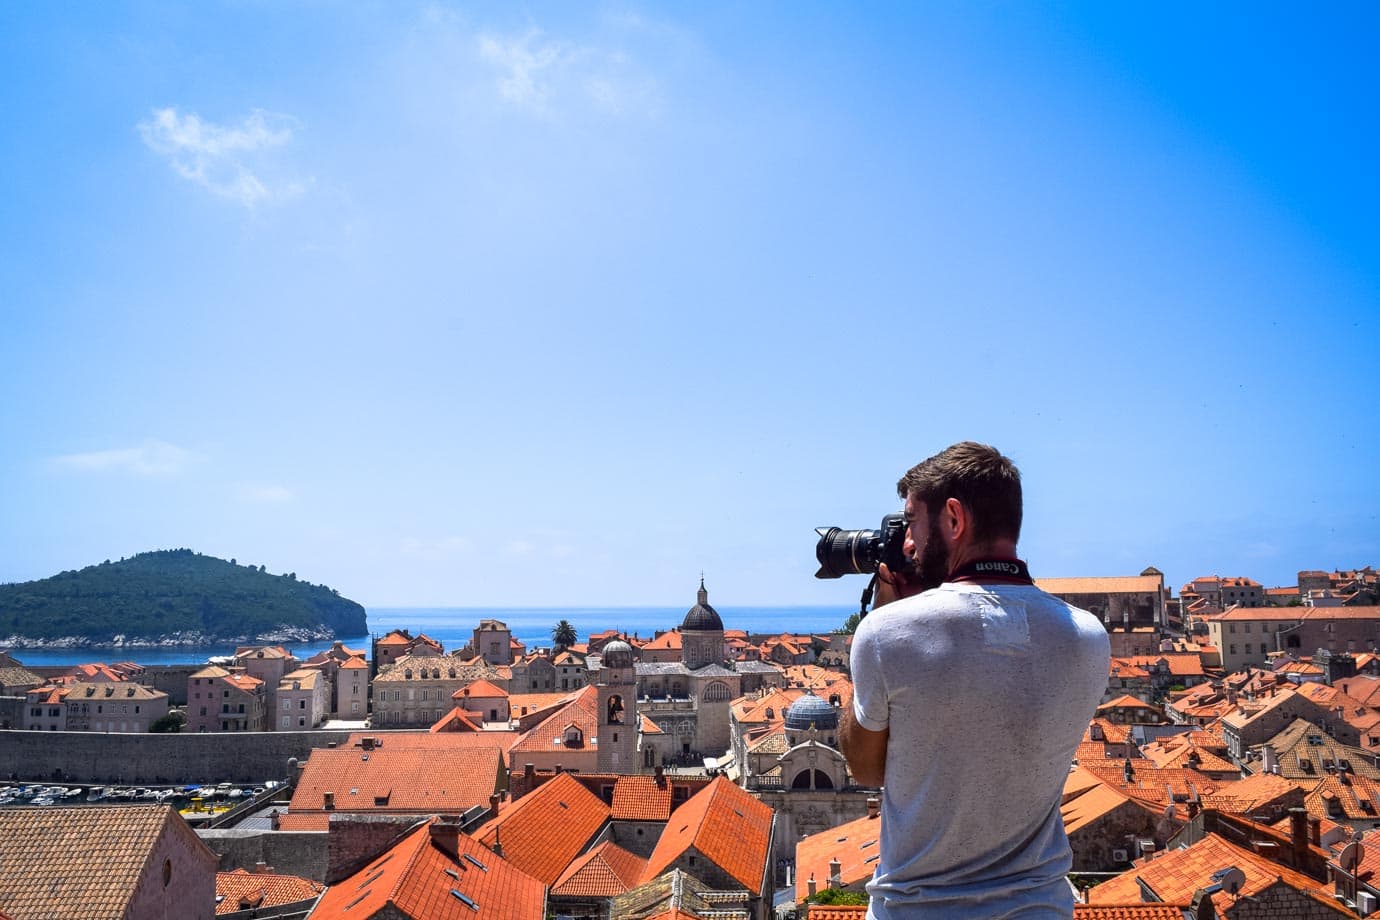 Taking photos in Dubrovnik, Croatia